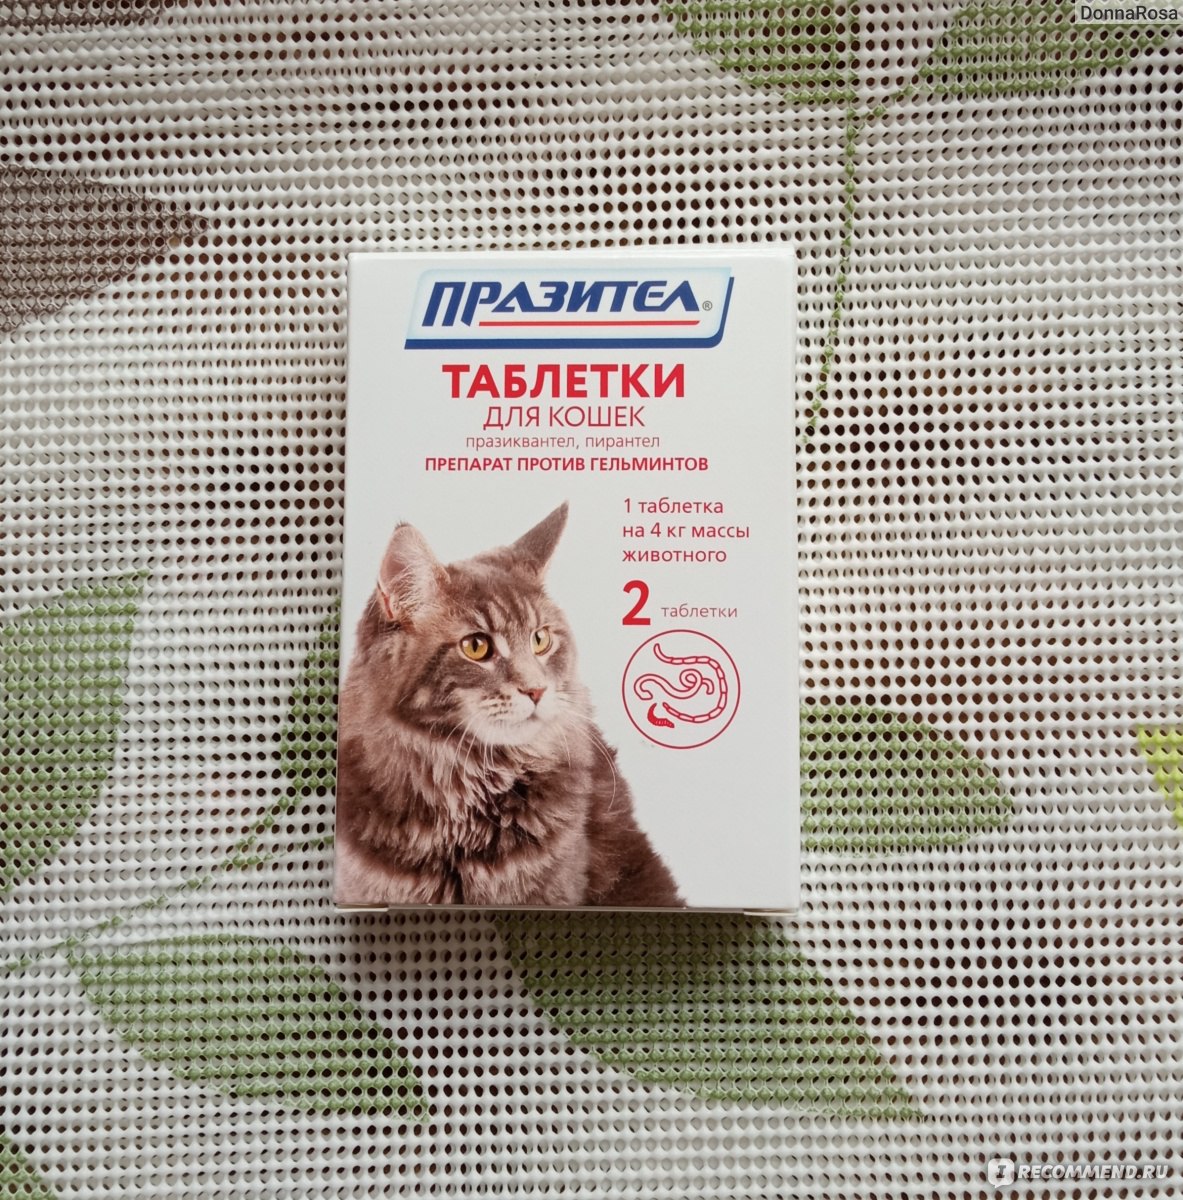 Празител для кошек таблетки фото